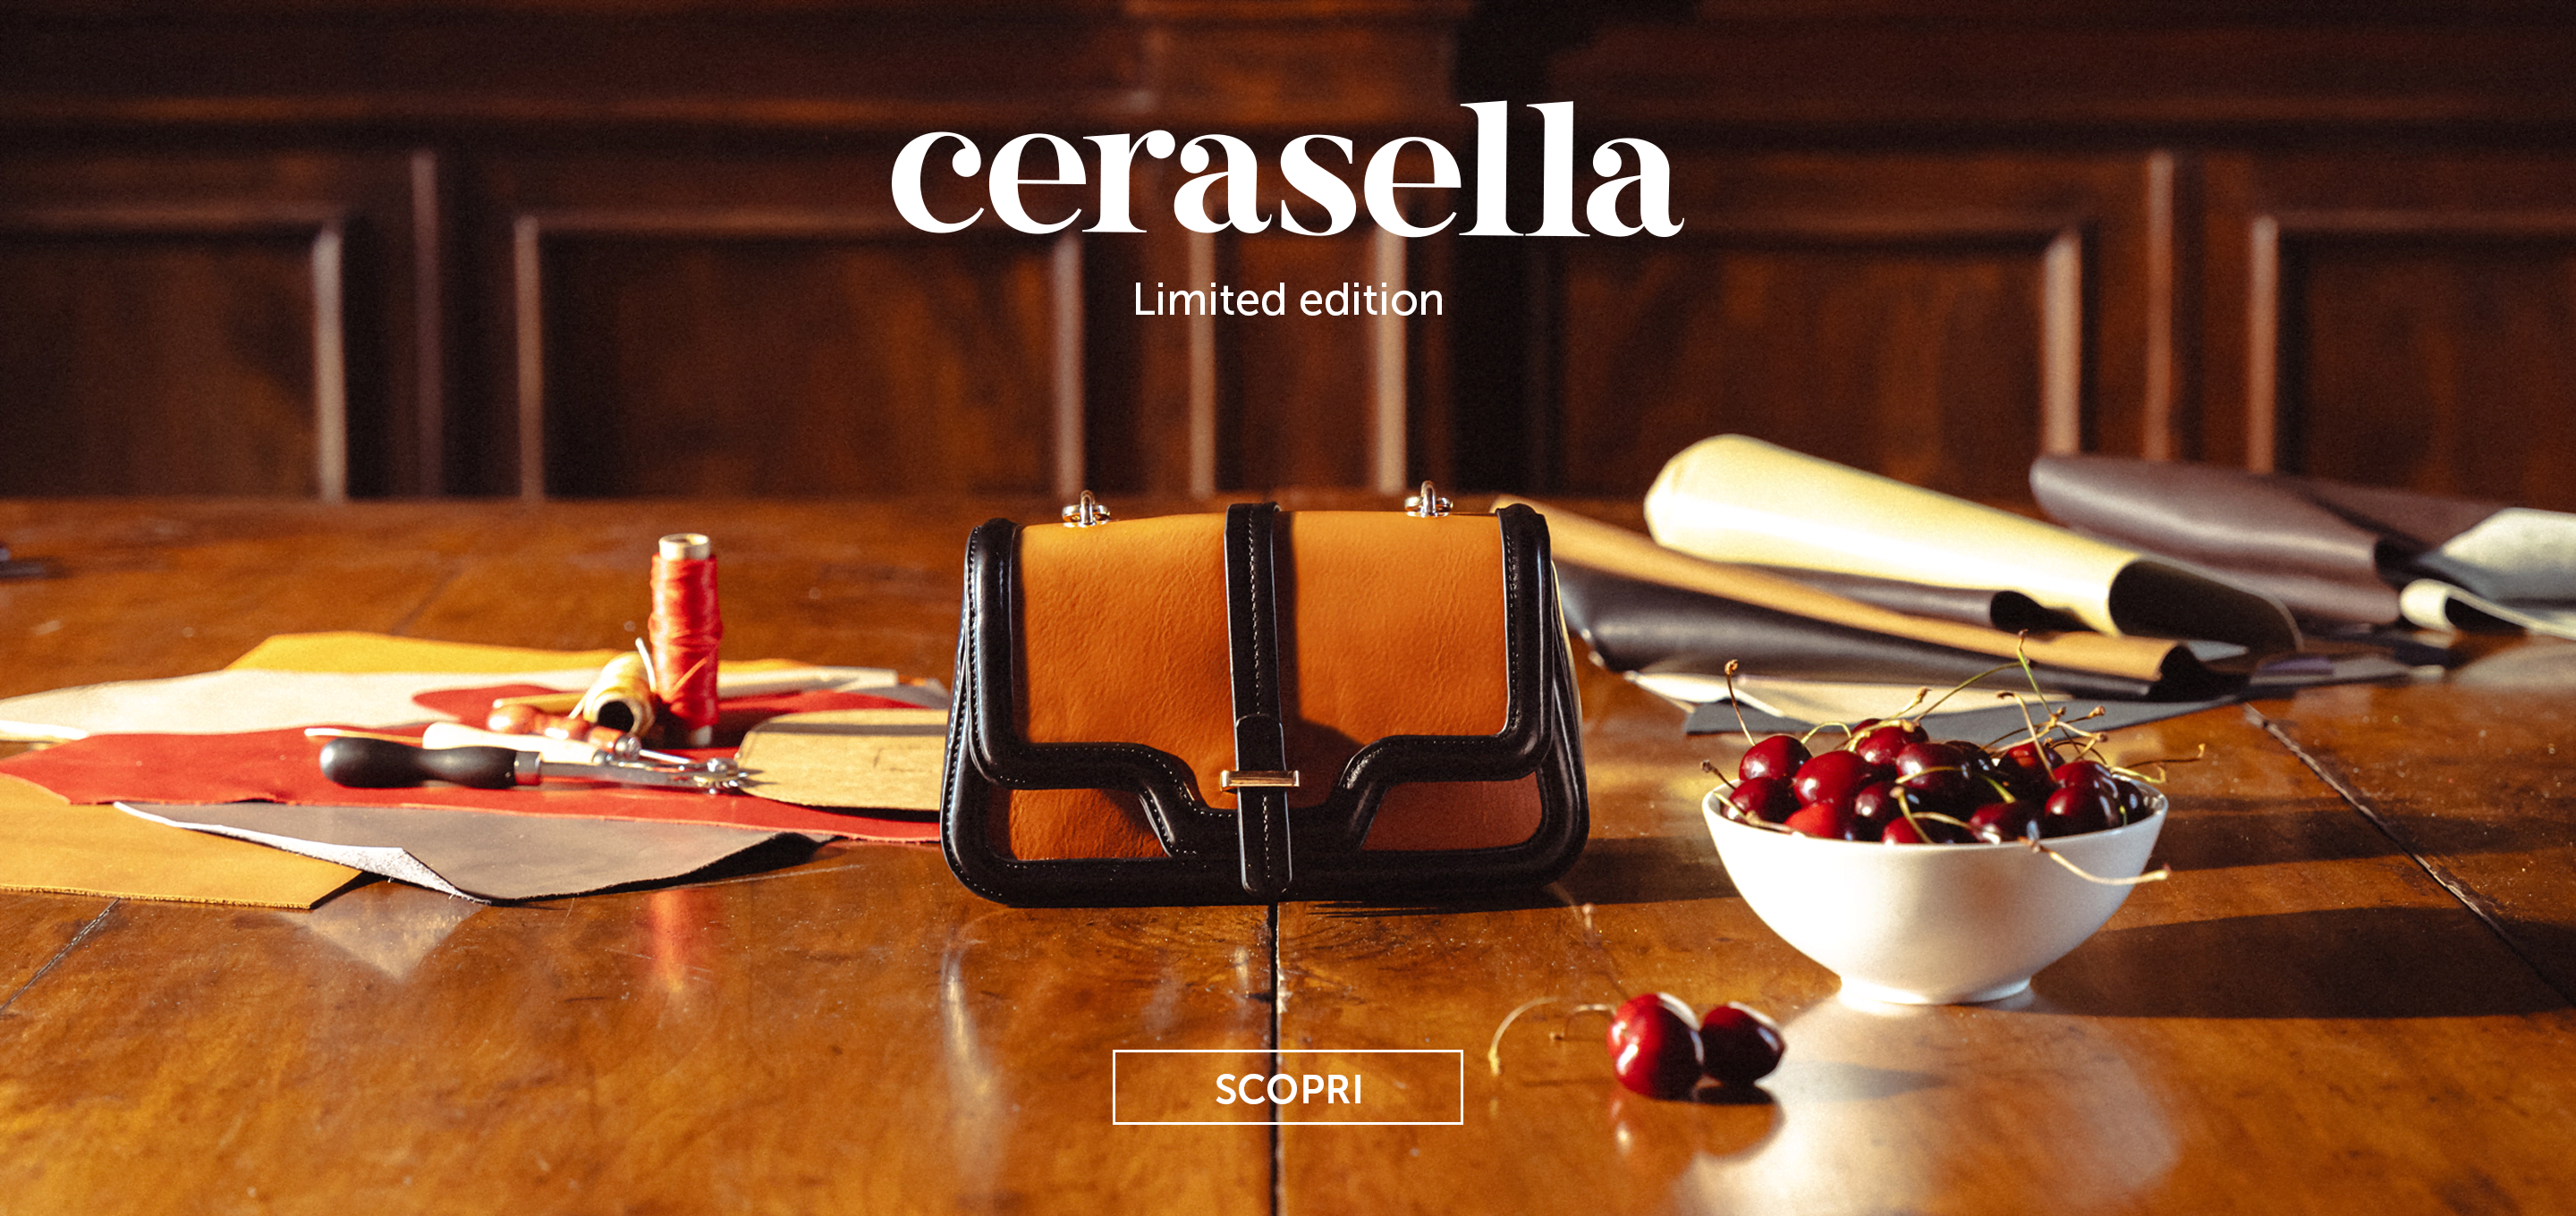 Cerasella limited edition